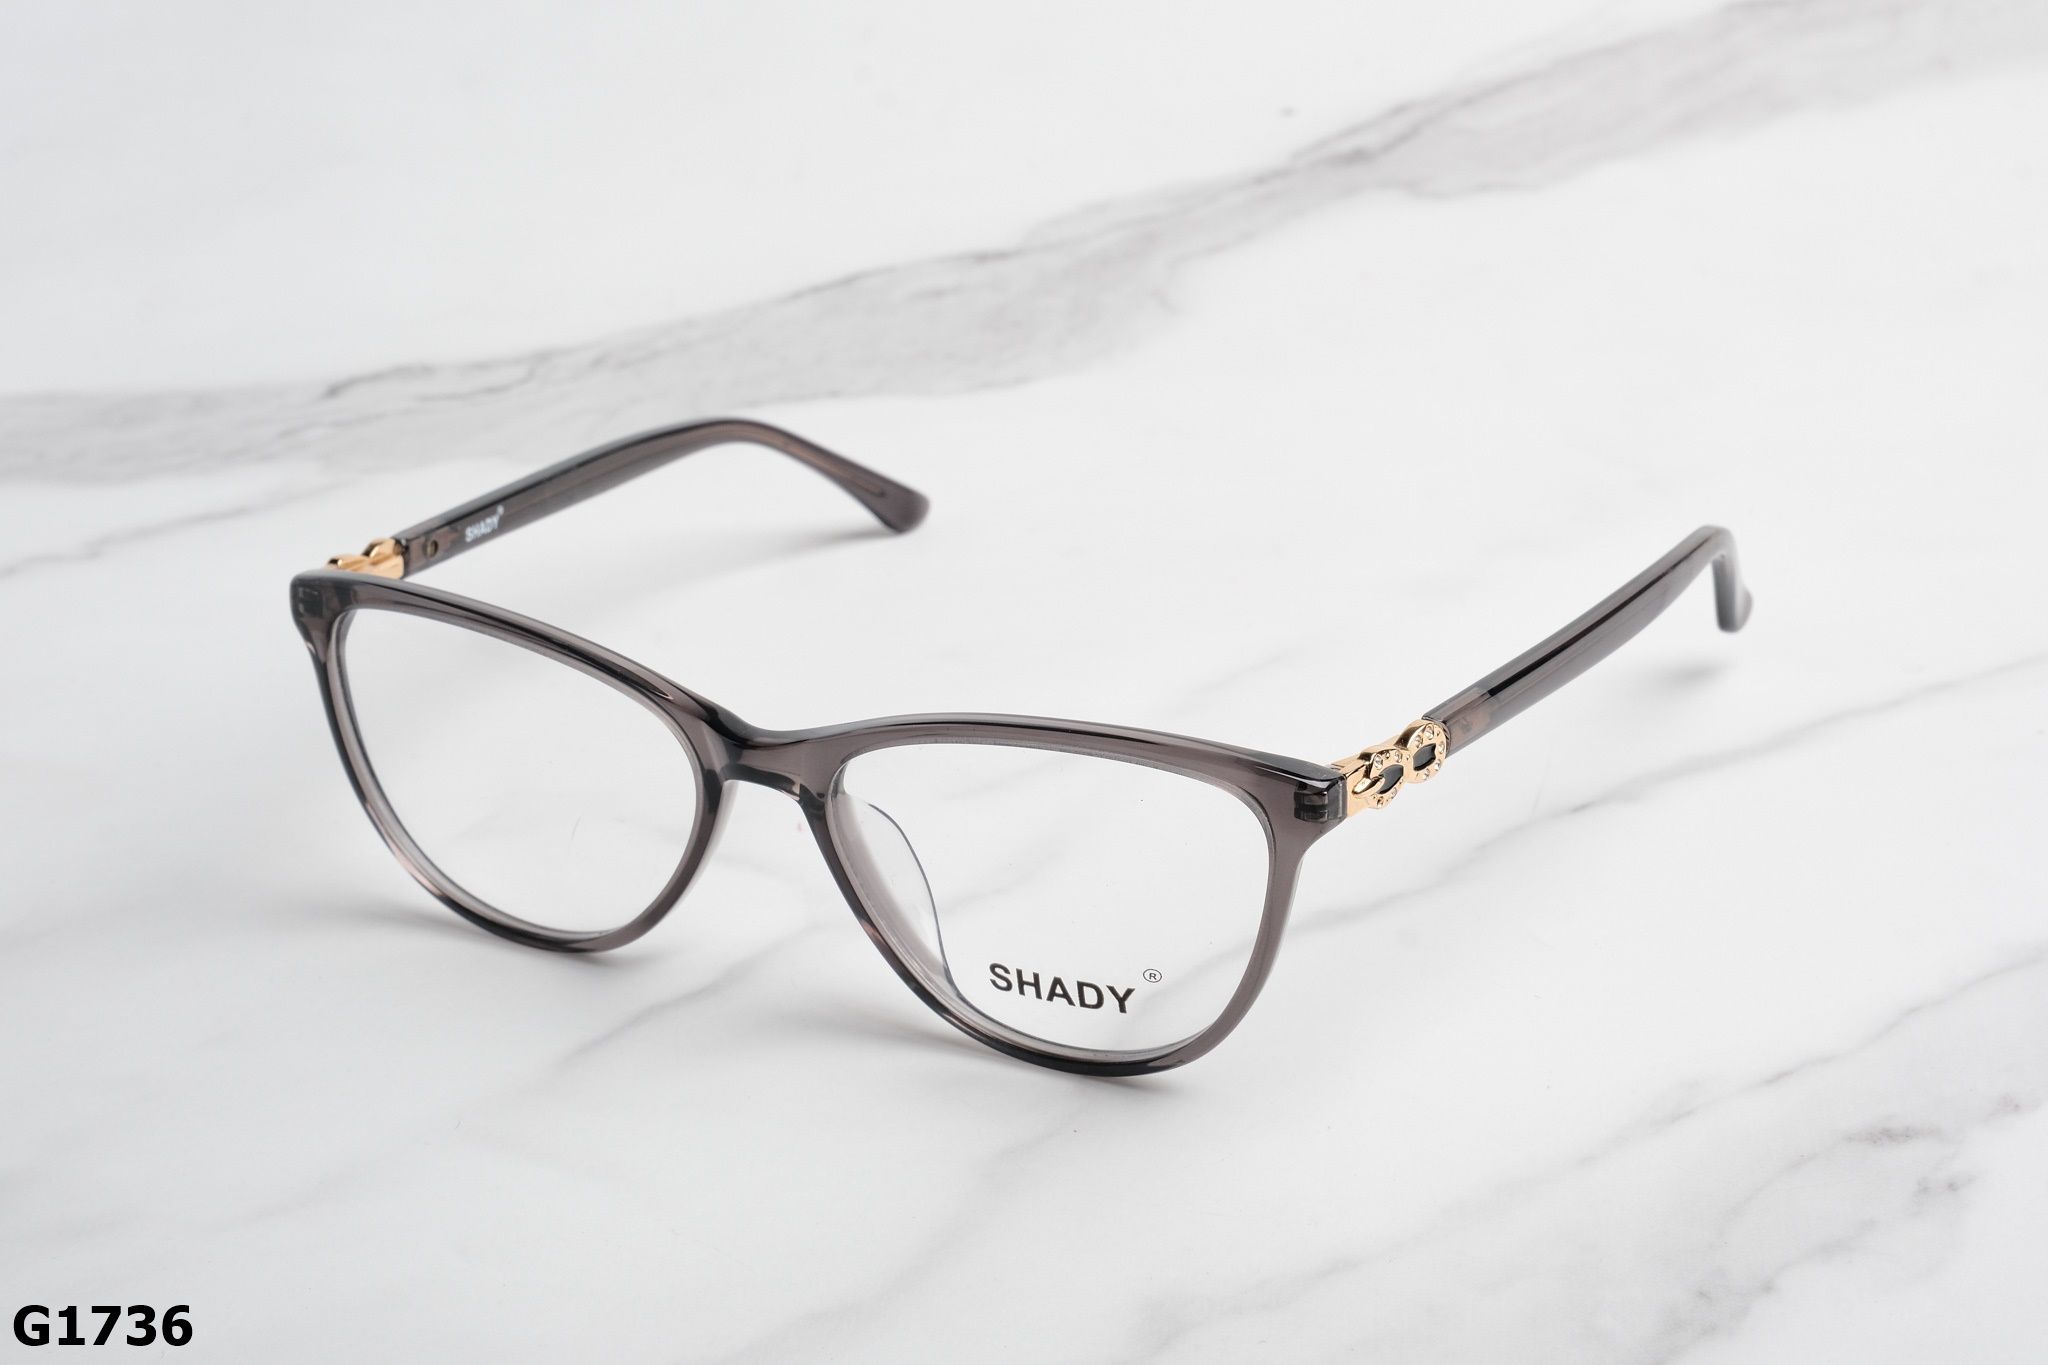  SHADY Eyewear - Glasses - G1736 